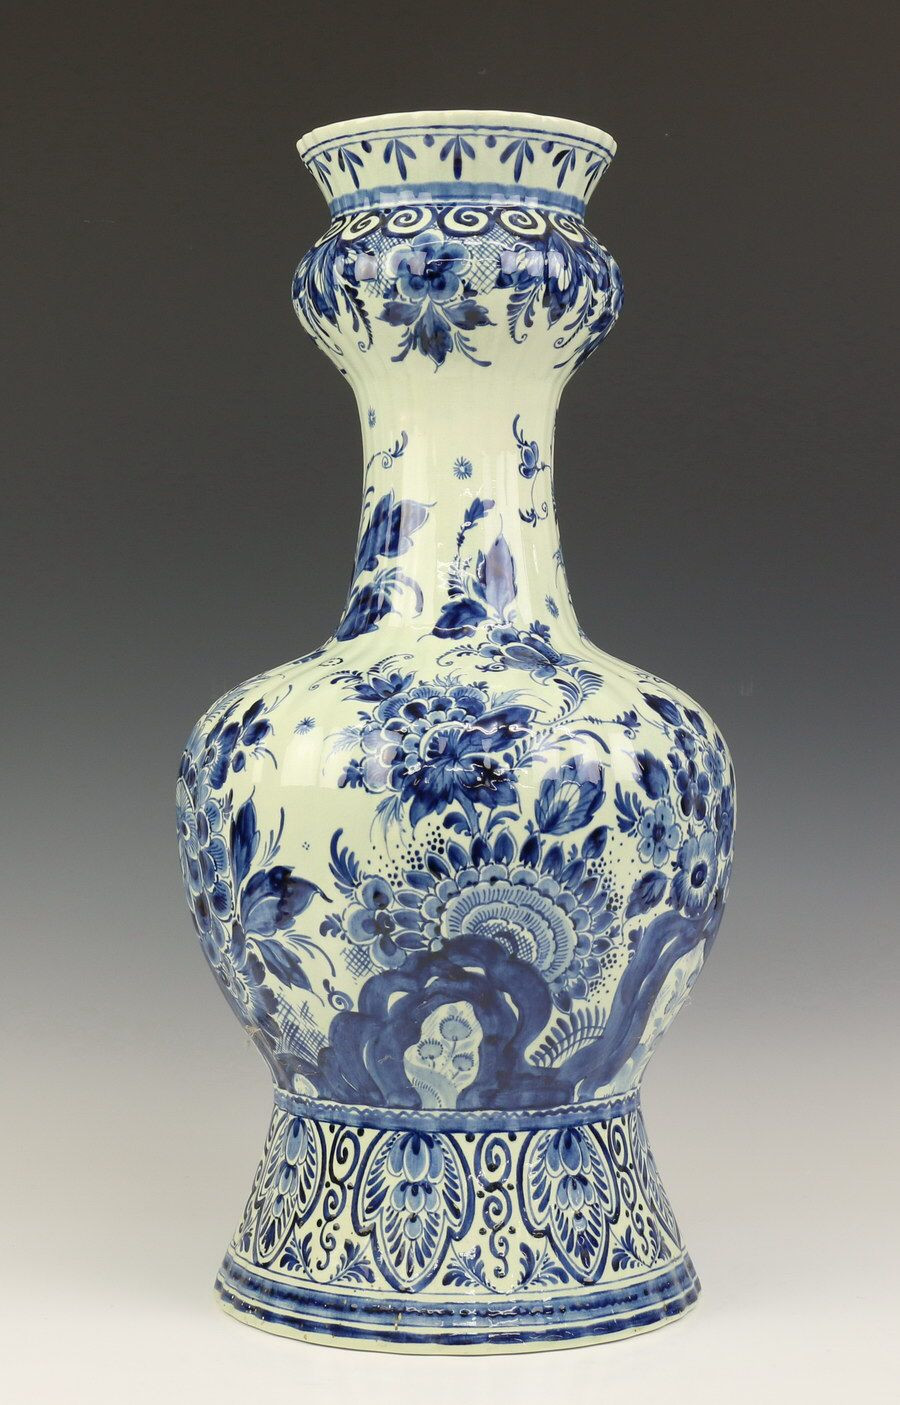 25 Cute Delft Vase Value 2023 free download delft vase value of delft grote blauw aardewerk knobbelvaas begin 20e jarrones intended for delft grote blauw aardewerk knobbelvaas begin 20e delft vases